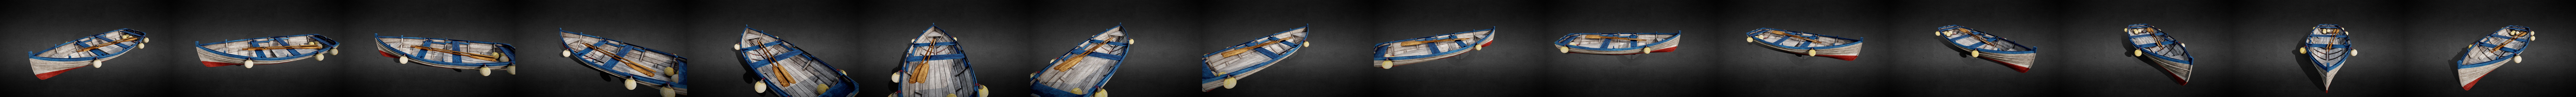 Old Fishing Rowing Boat - Buy Royalty Free 3D model by carlcapu9  (@carlcapu9) [7c7f52e]